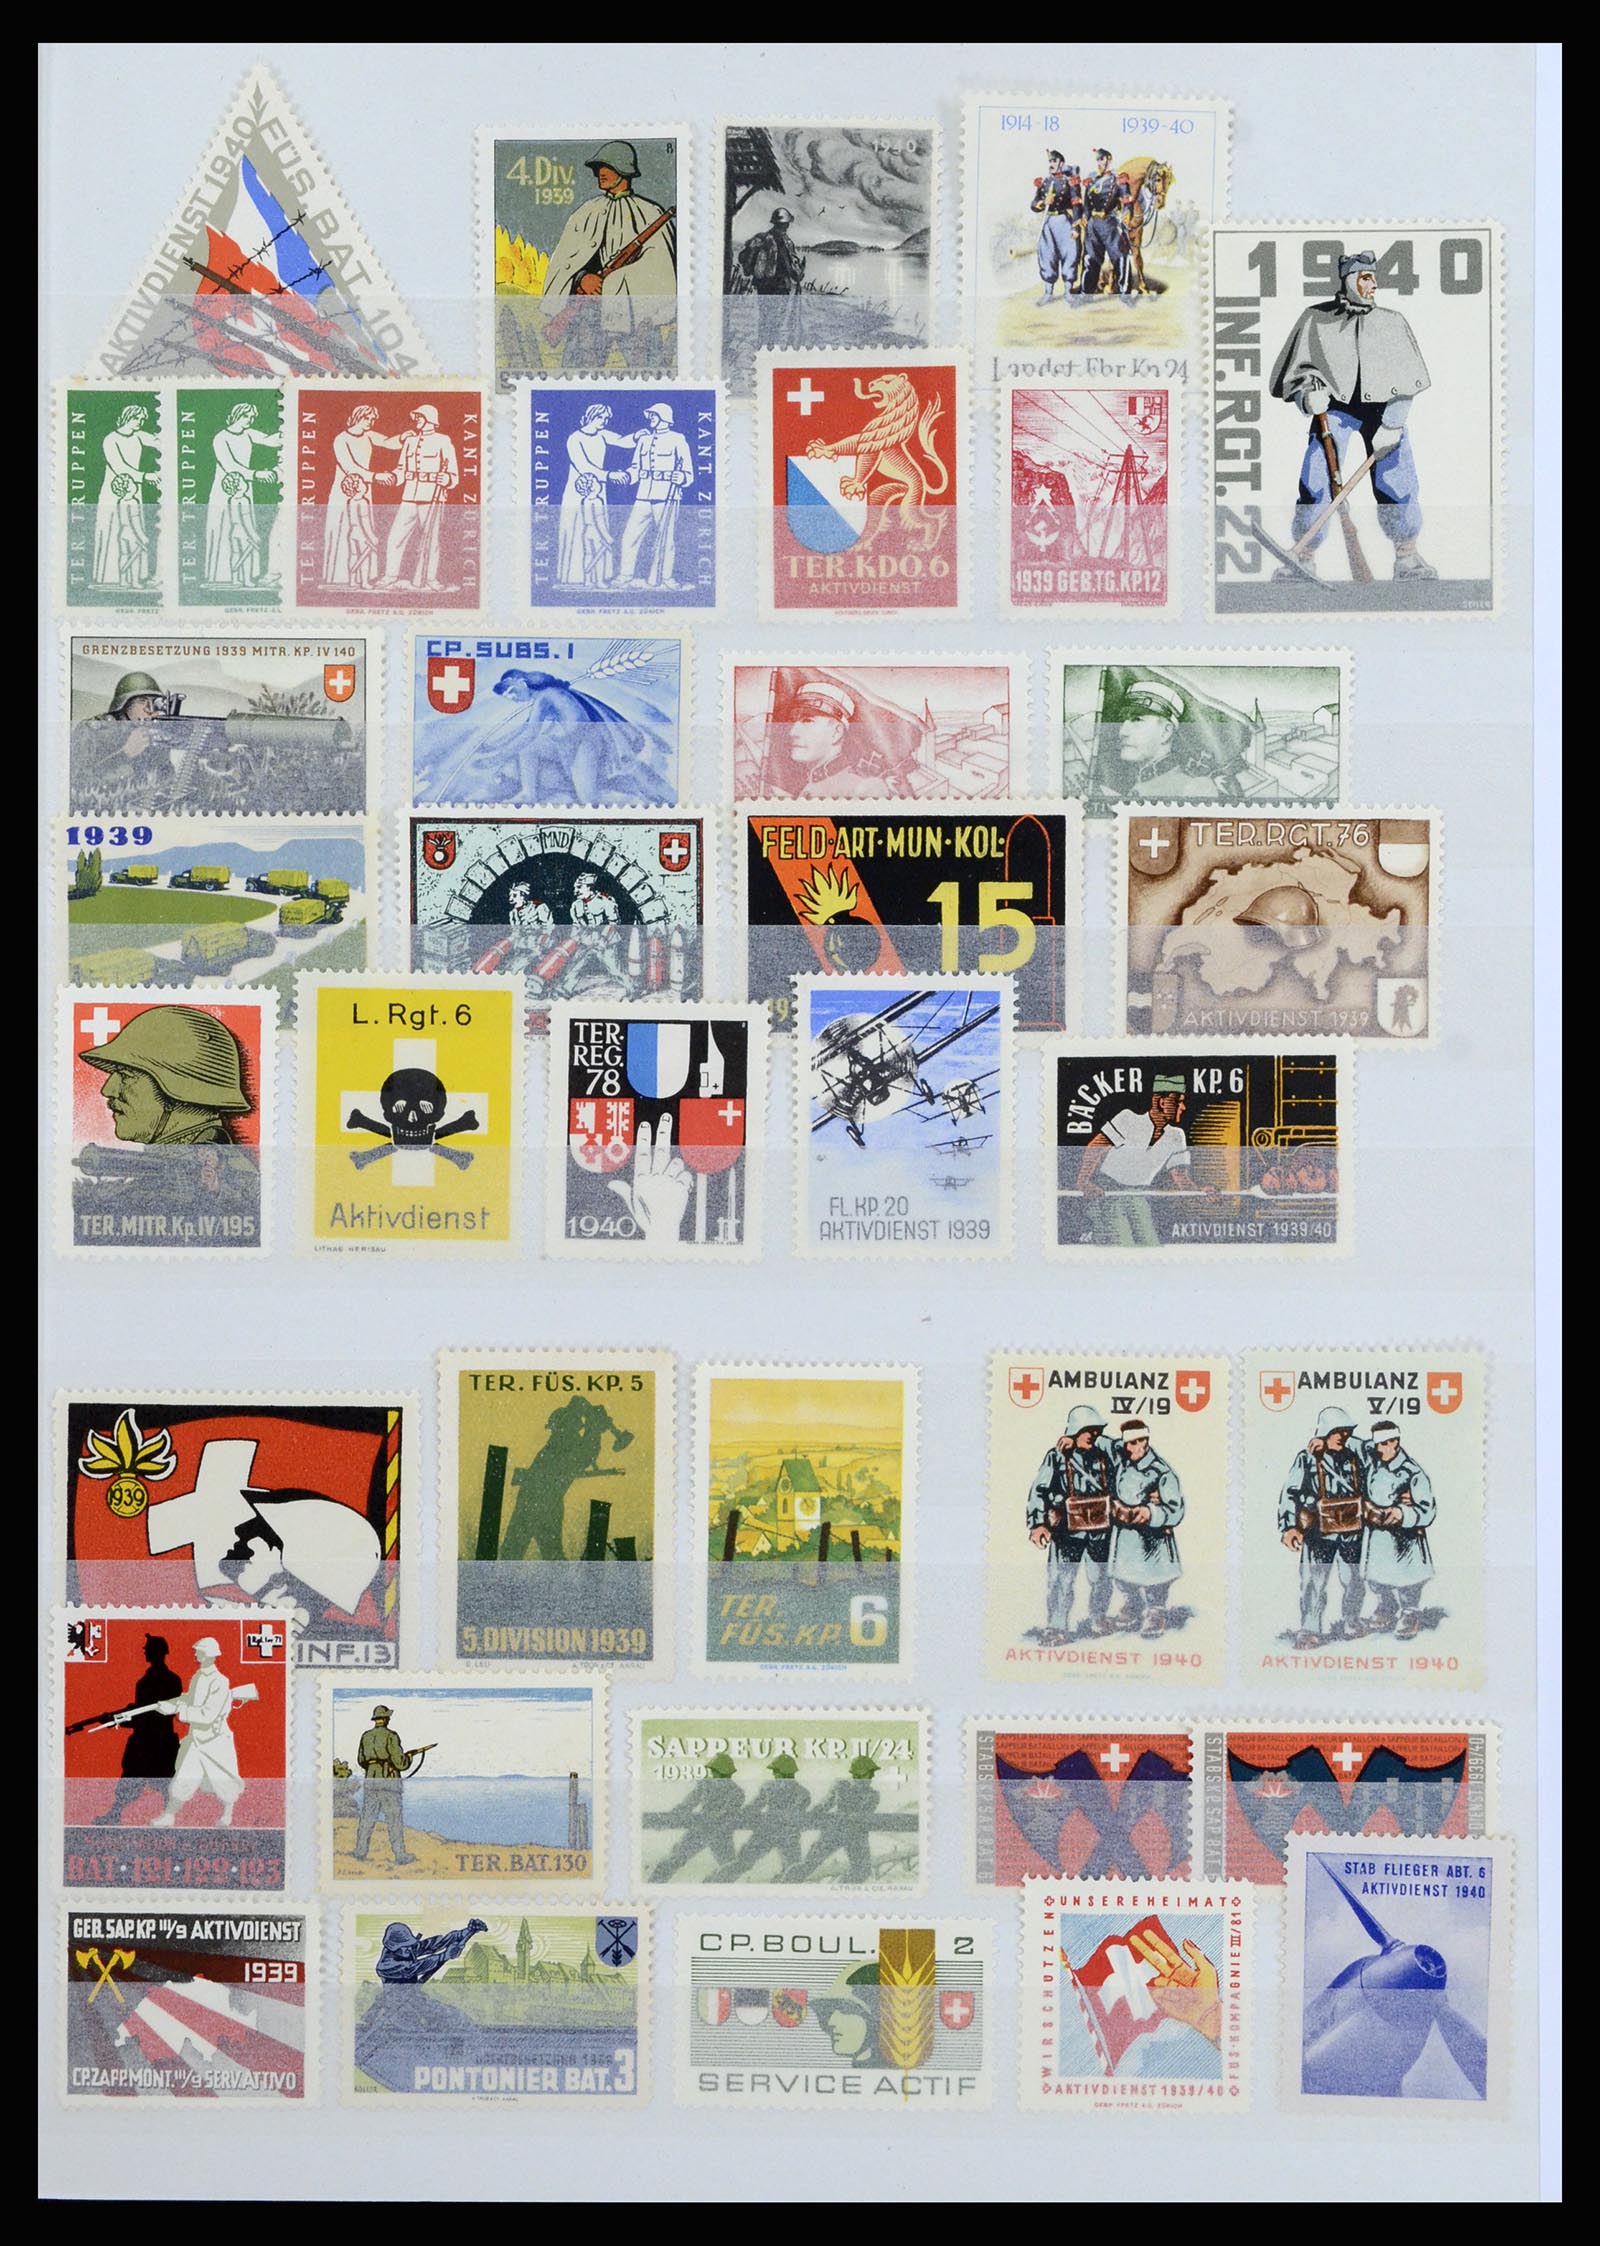 37149 013 - Stamp collection 37149 Switzerland soldier stamps 1914-1945.